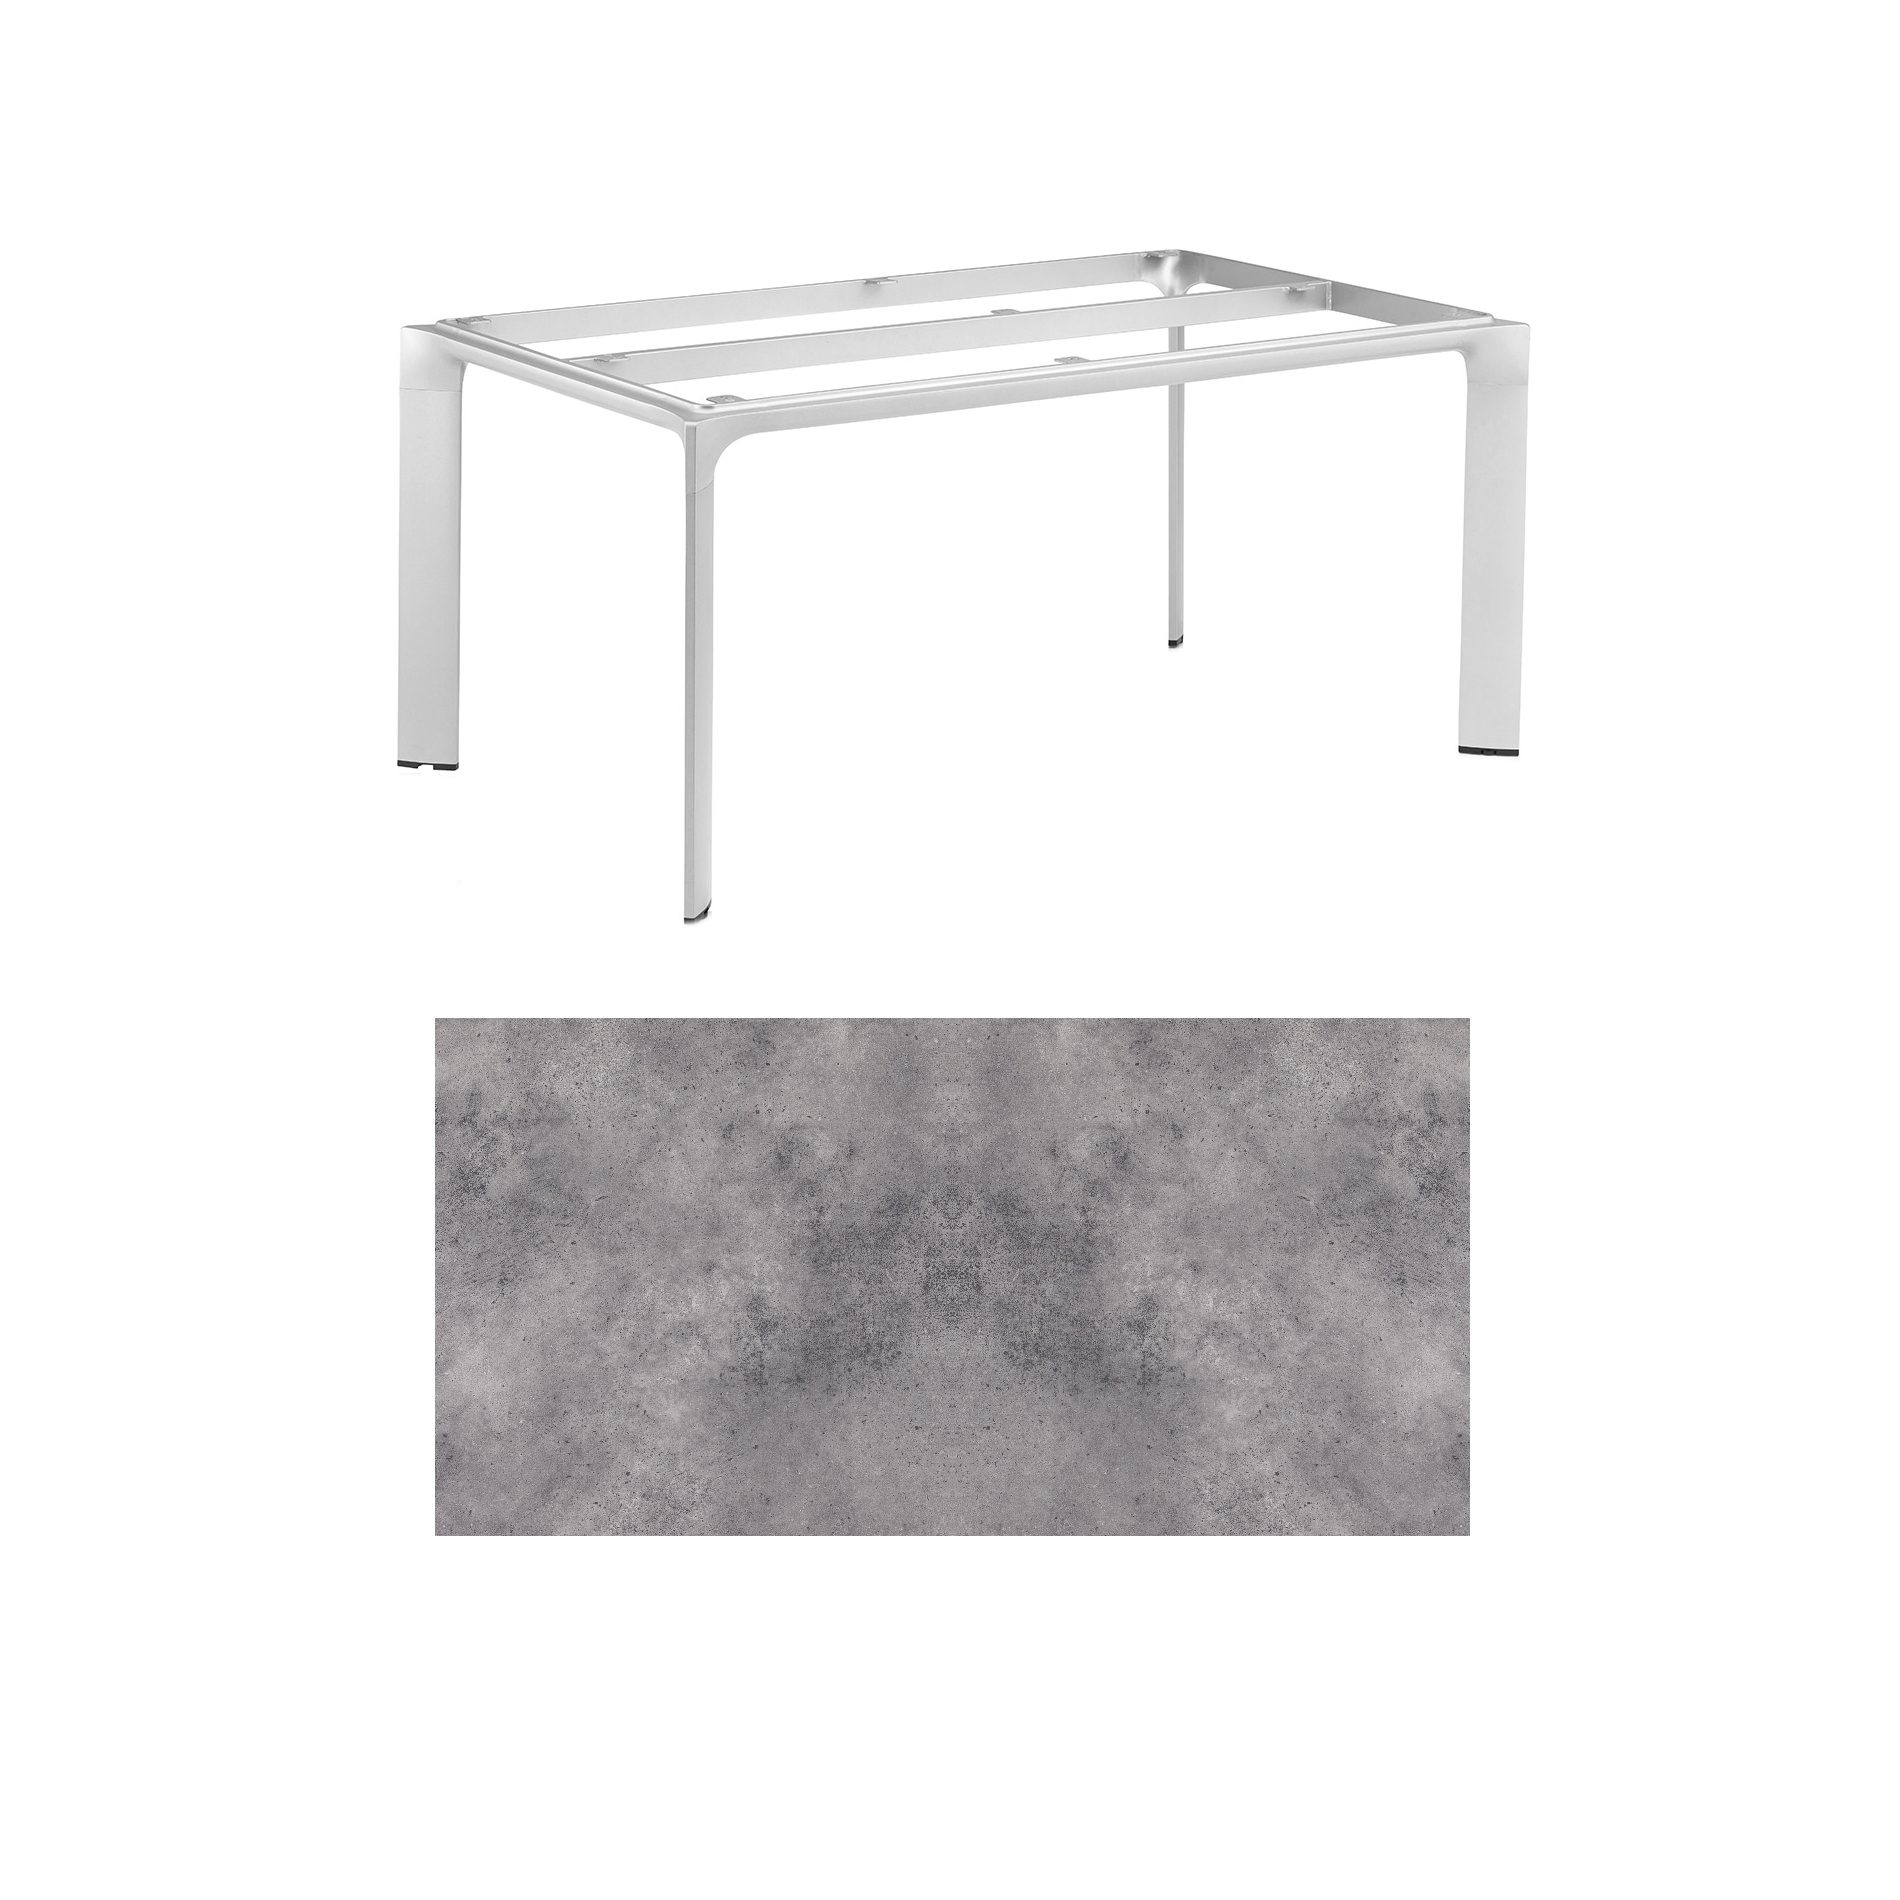 Kettler "Diamond" Tischsystem Gartentisch, Gestell Aluminium silber, Tischplatte HPL anthrazit, 180x95 cm